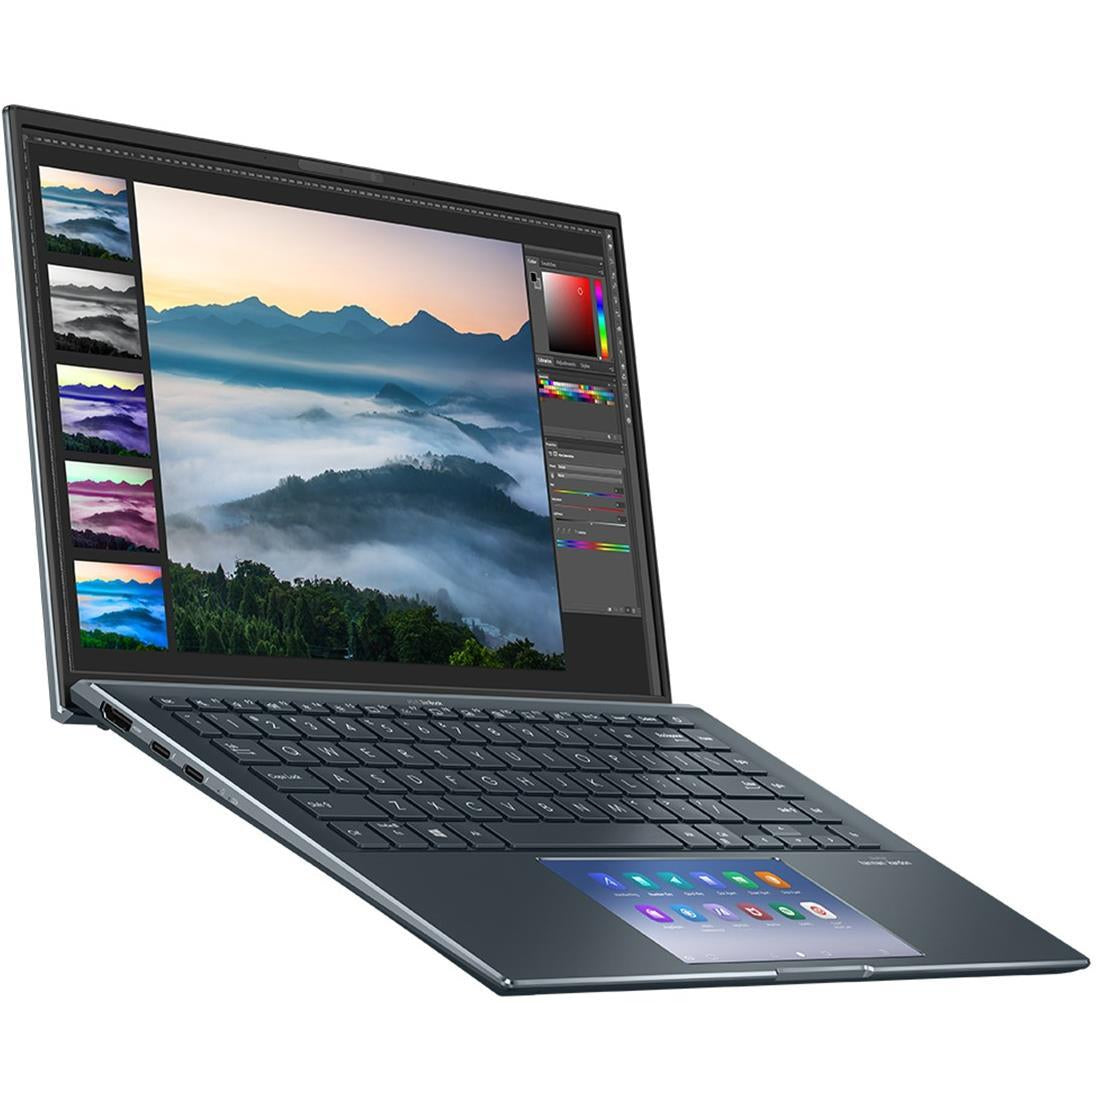 ASUS ZenBook UX435EG-AI082T Intel Core i7 16GB RAM 512GB SSD - Grey - New